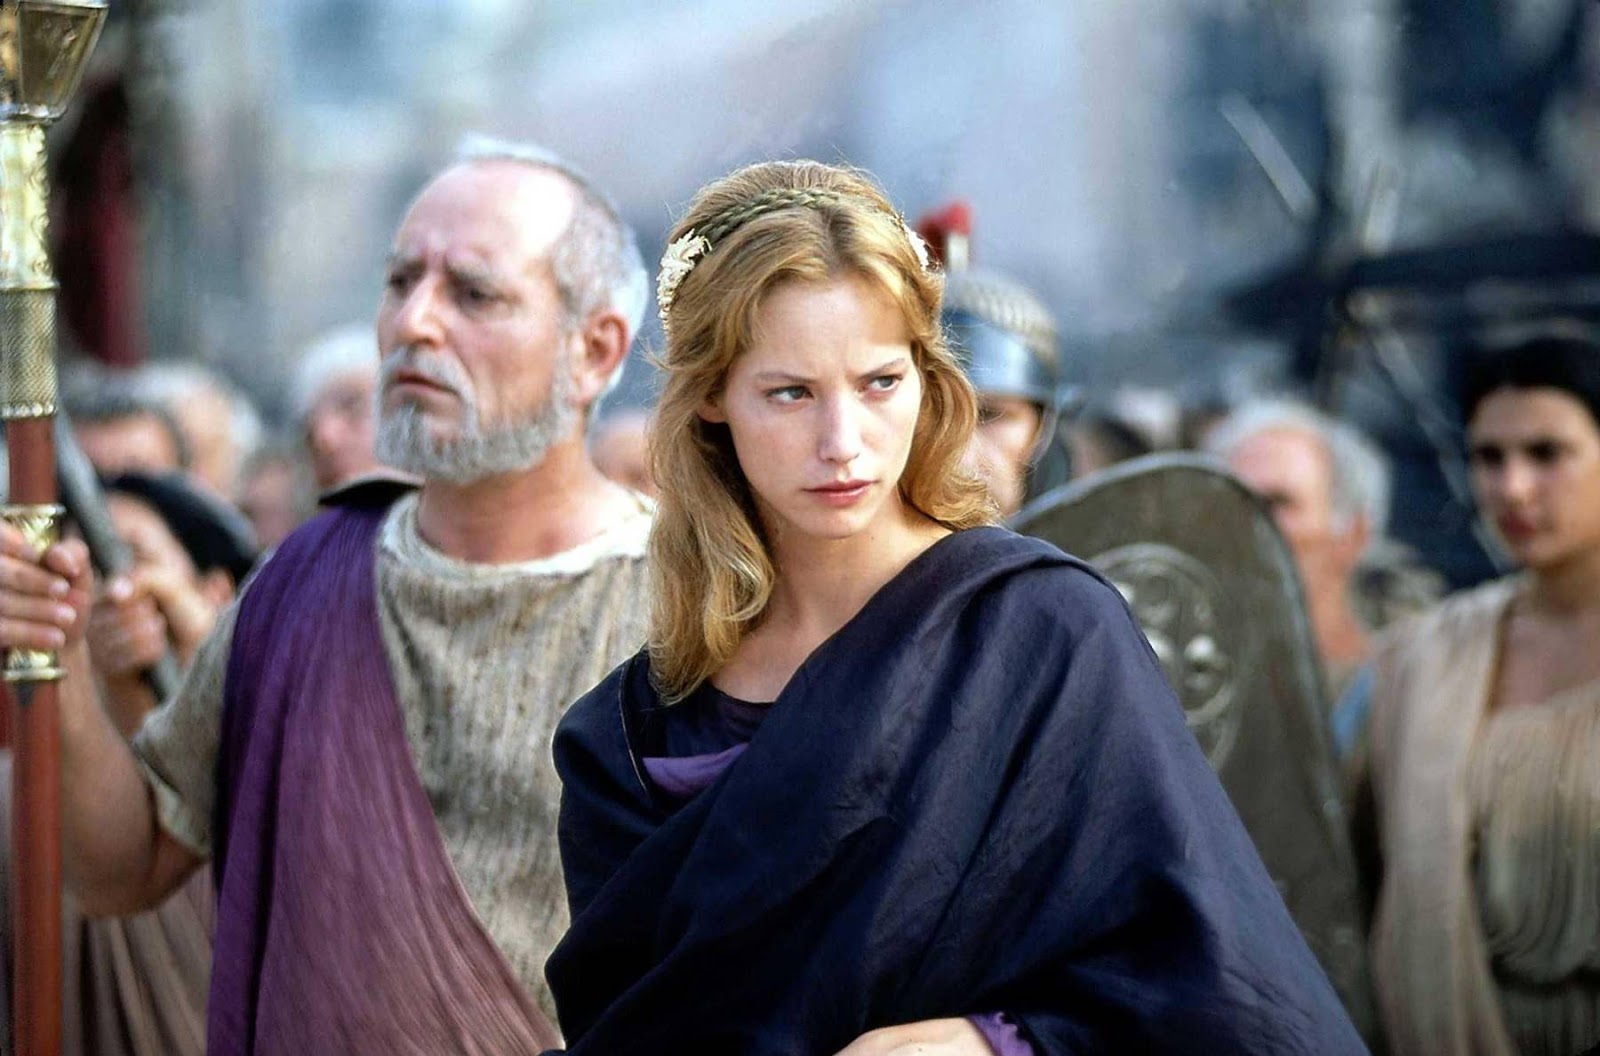 دانلود فیلم Helen of Troy 2003